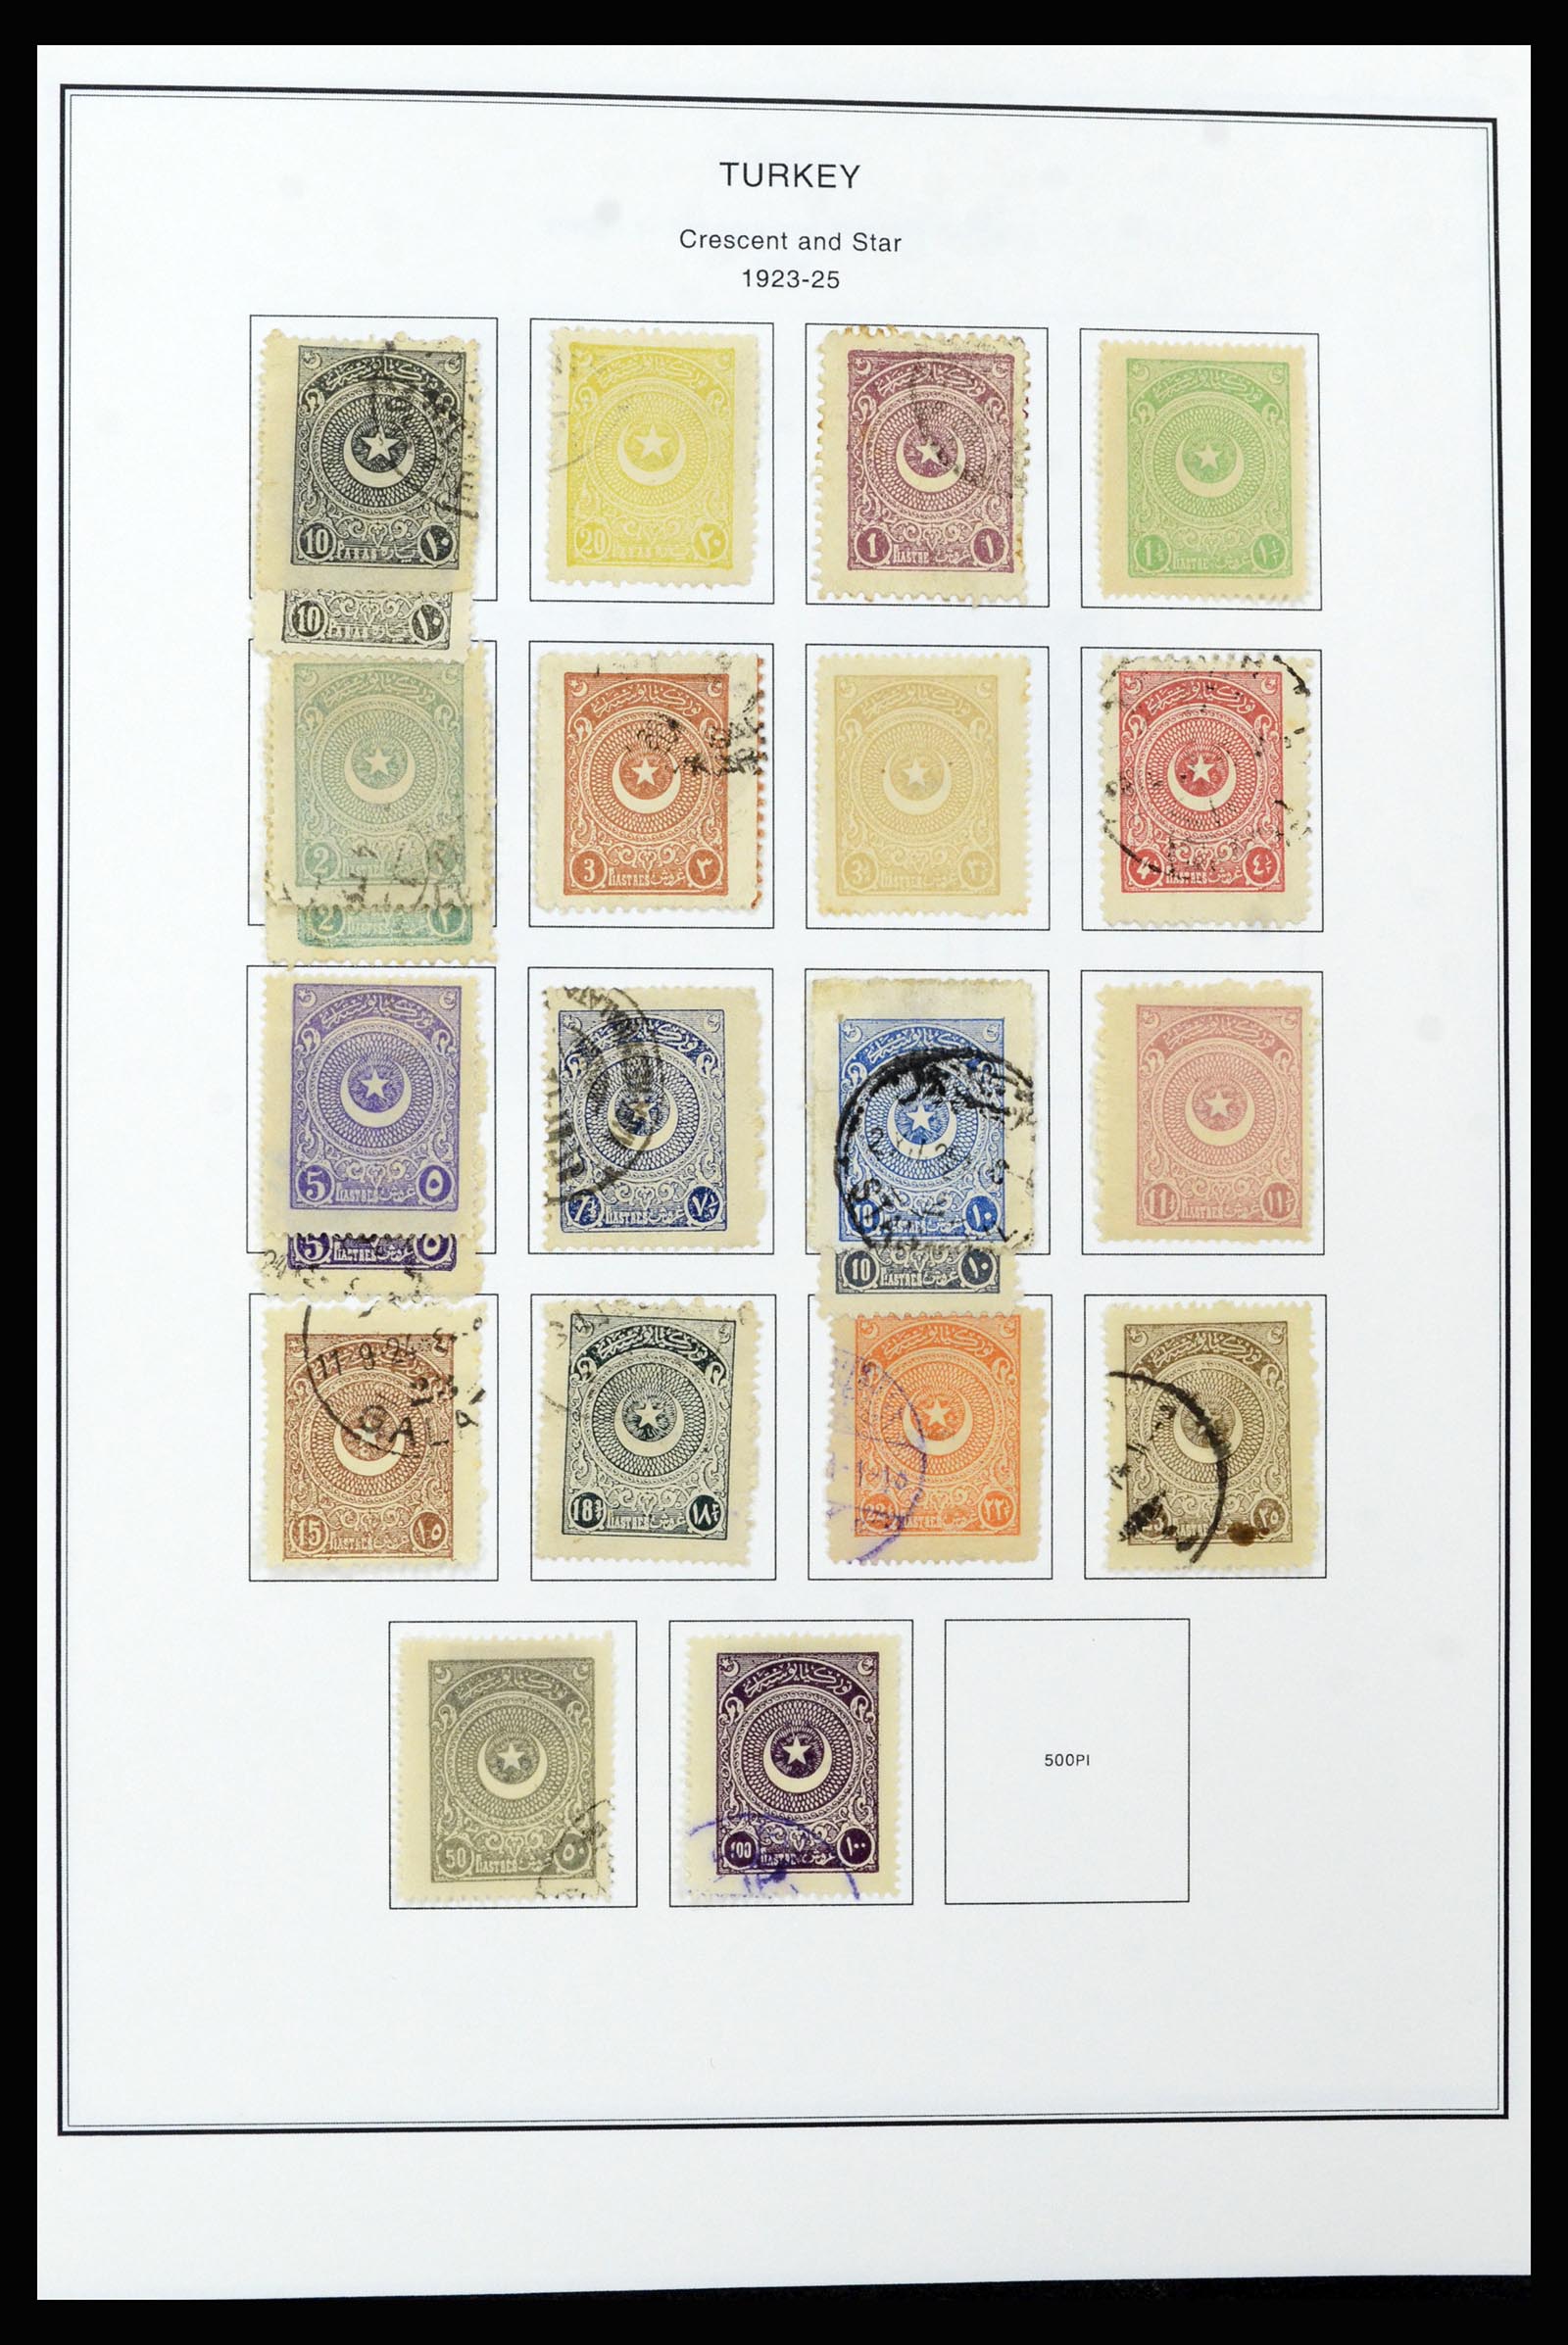 37224 036 - Stamp collection 37224 Turkey 1863-2000.